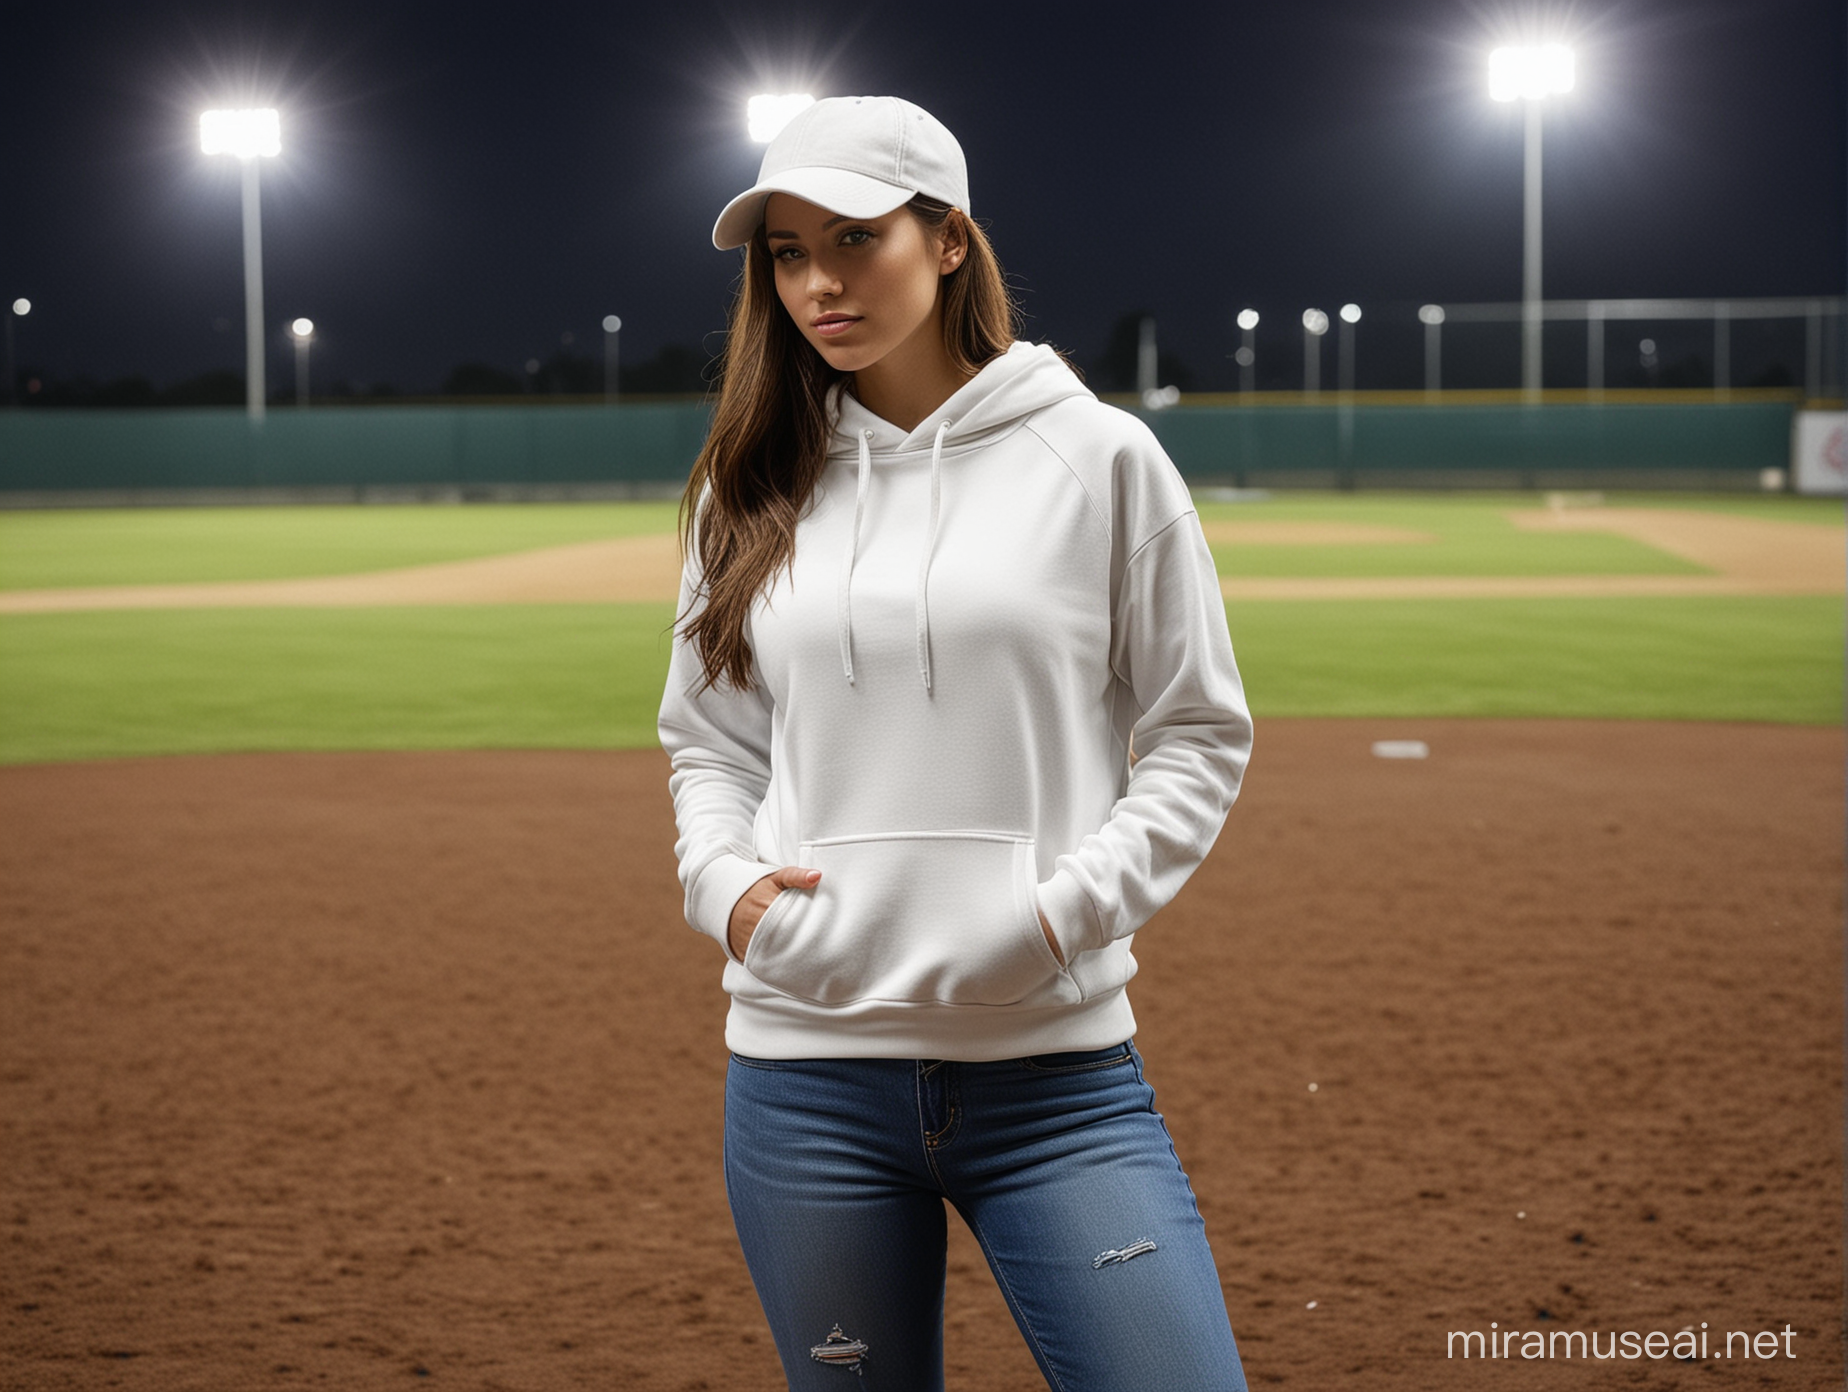 Stylish Woman in White Hoodie and Baseball Cap on Nighttime Baseball Field